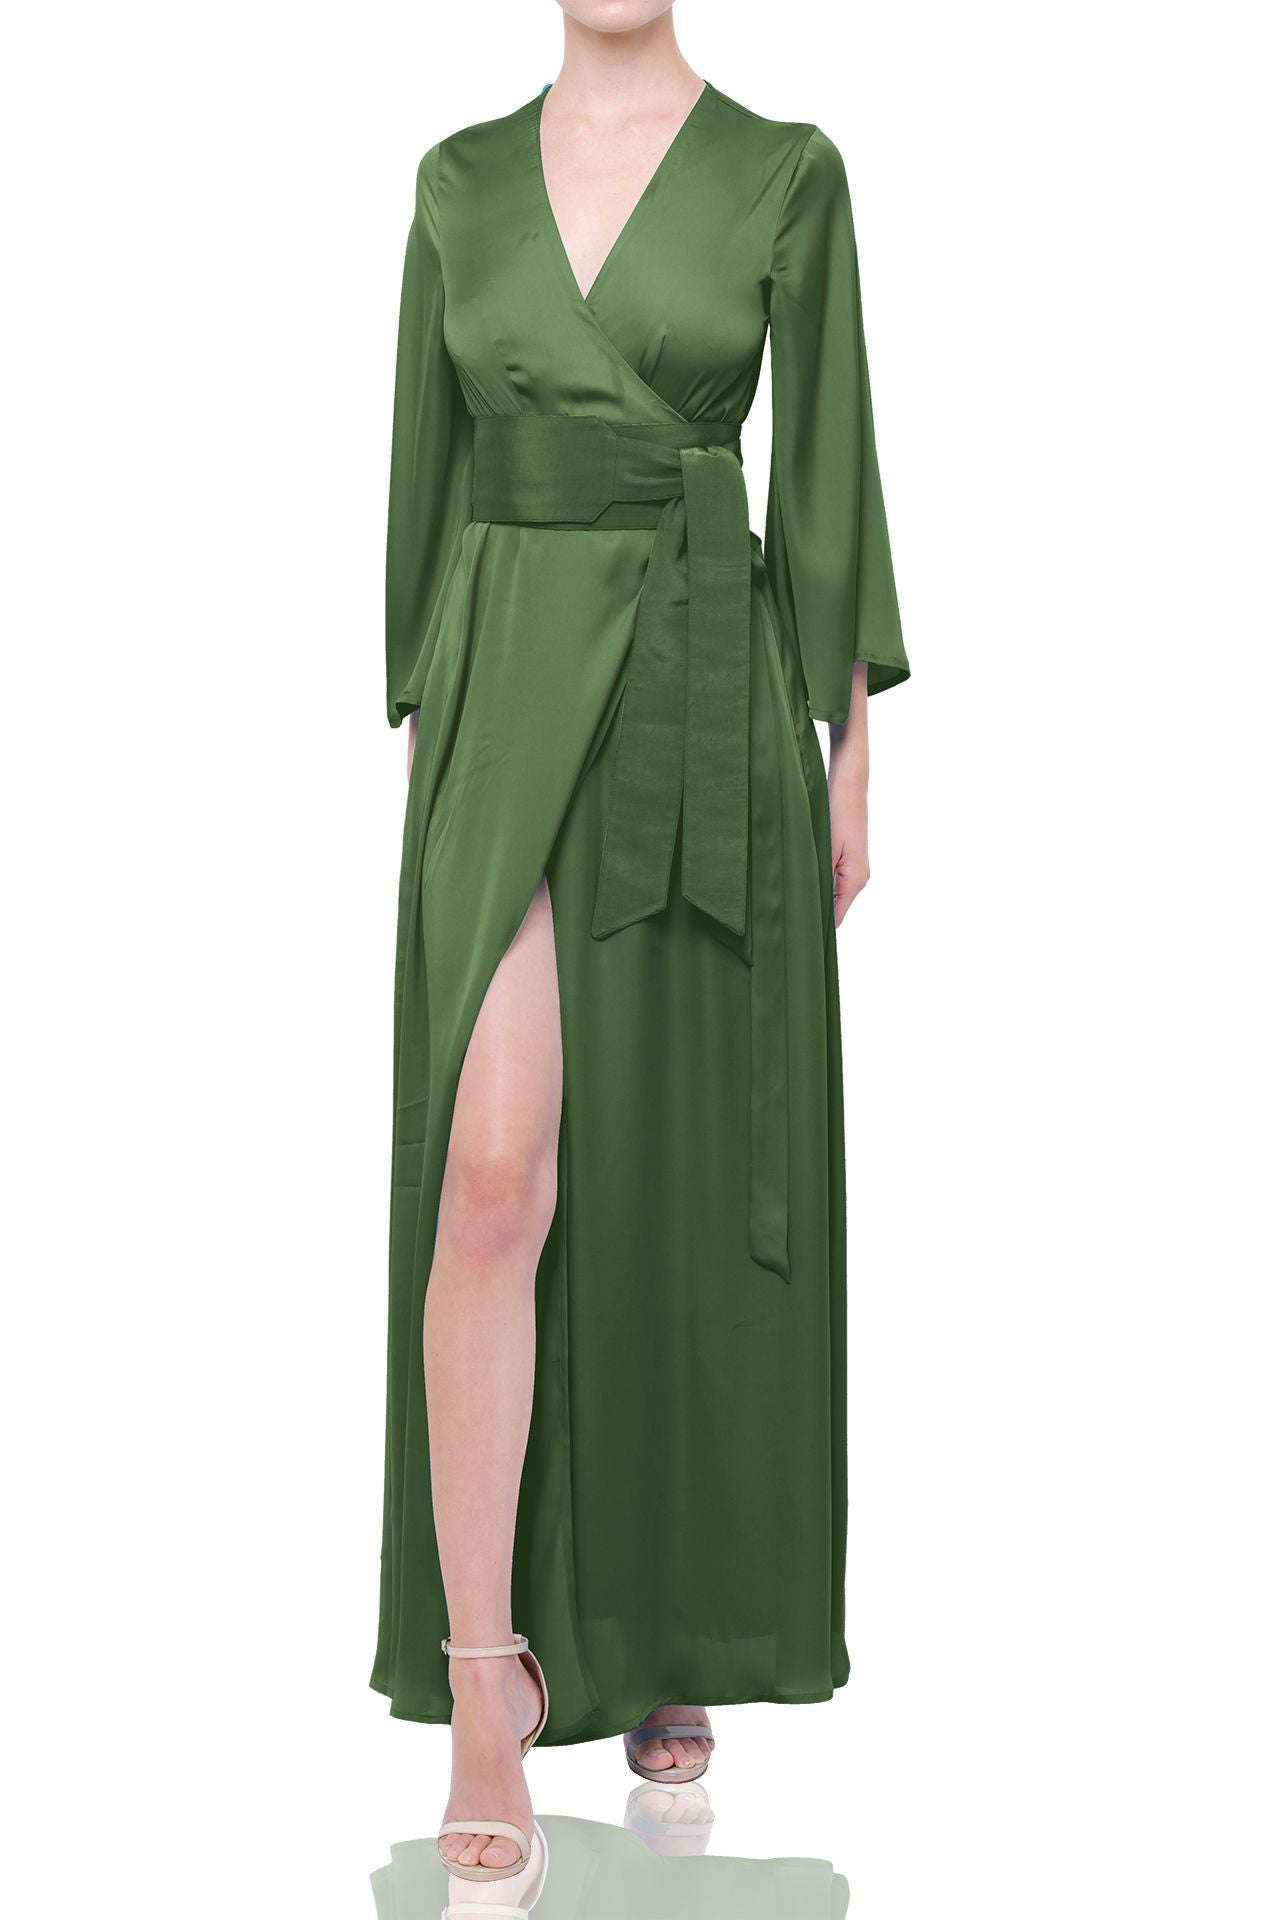 Designer Full Sleeve Maxi Wrap Dress in Solid